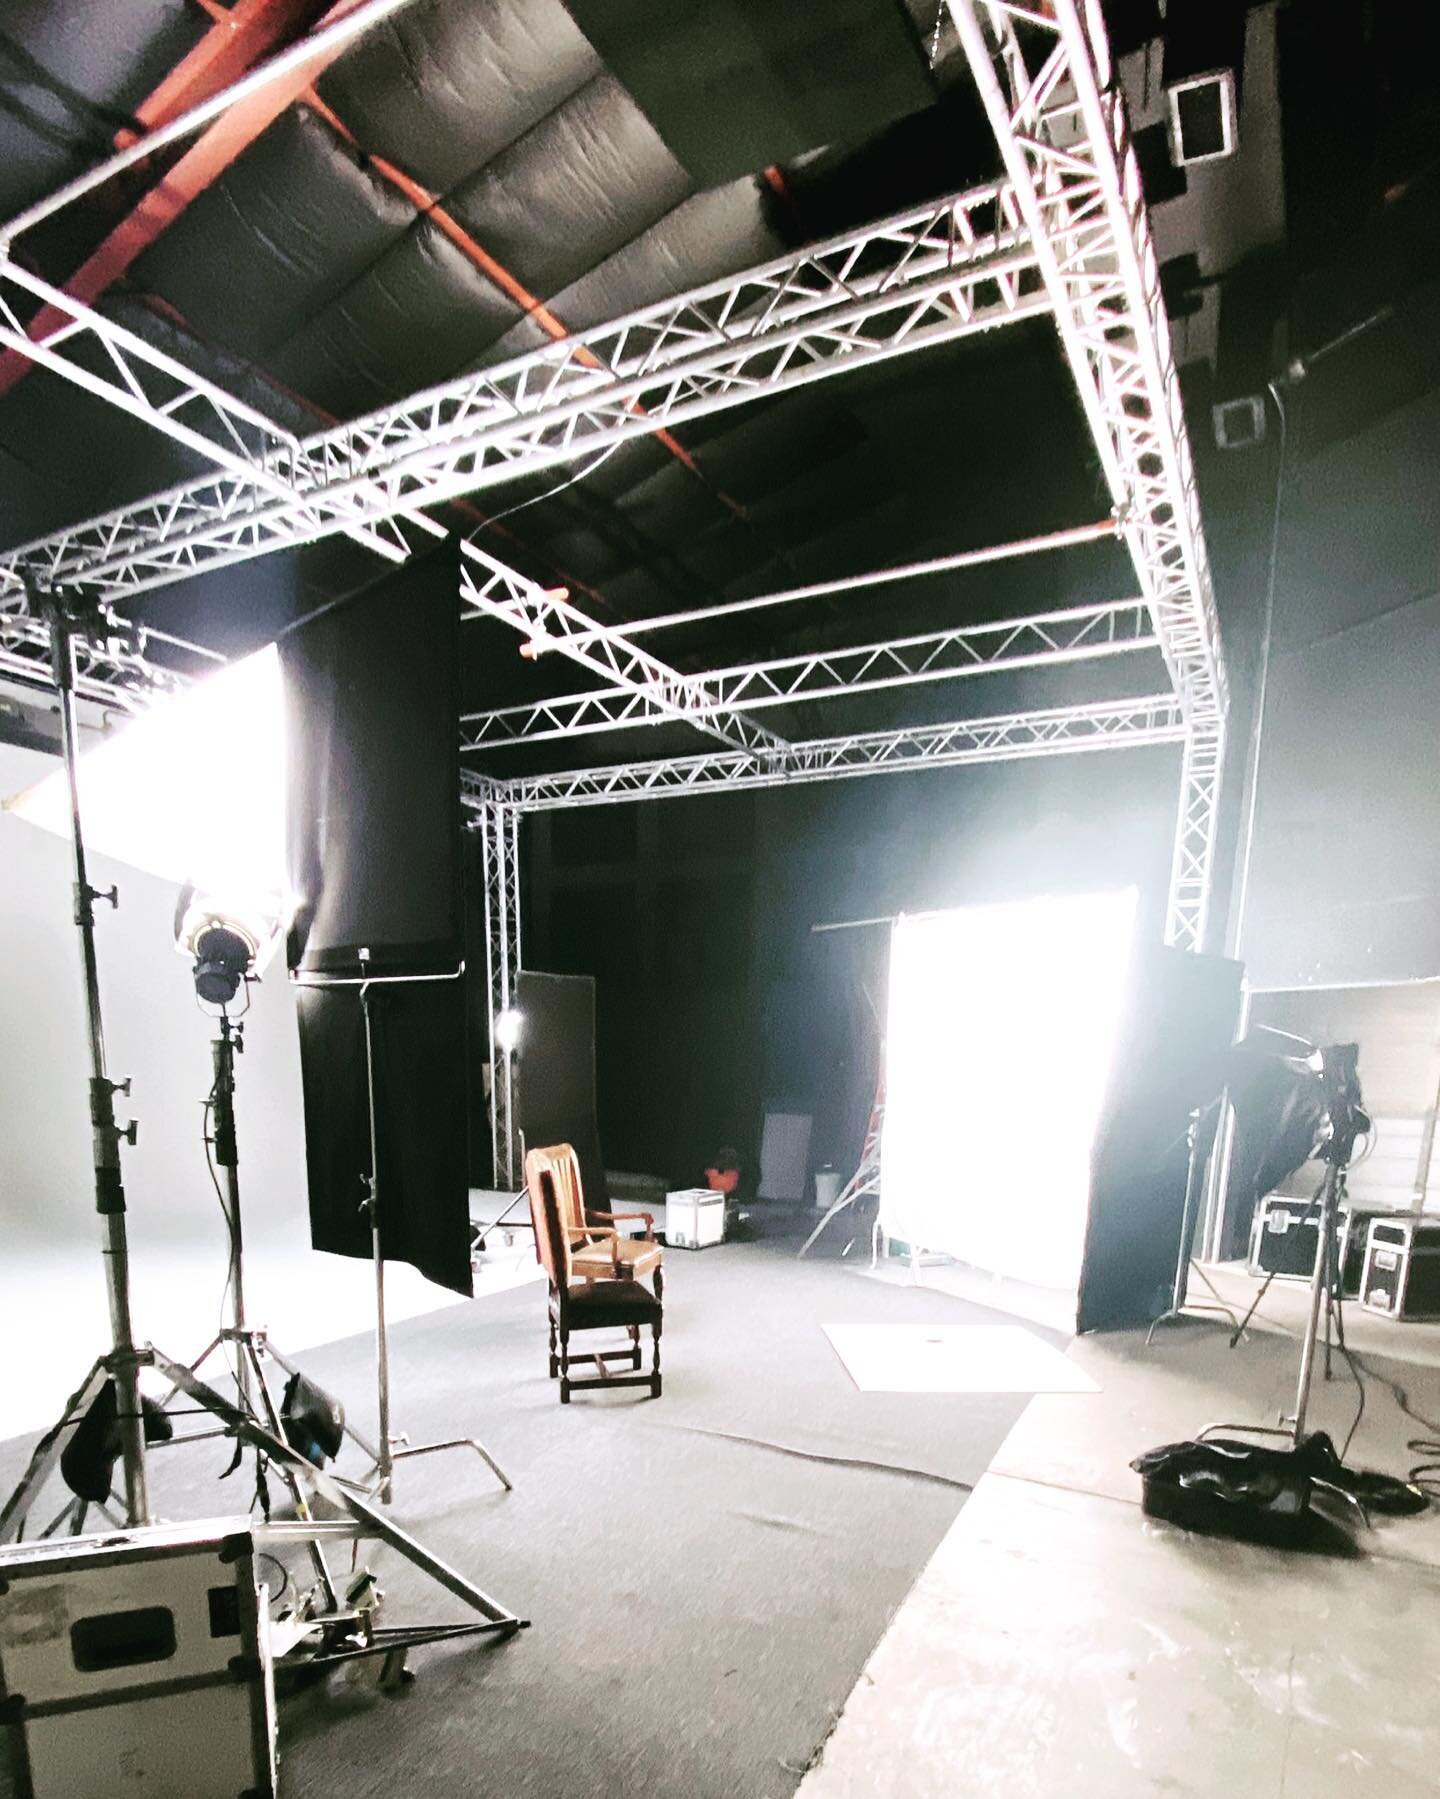 Waiting on talent. 
.
.
.
#360studios #production #commercial #studio #aduro #setlife #camera #cinematography #arriskypanel #skypanel #stage #filmmaker #actor ##filmmaking #film #filmmaker #cinematography #cinema #director #photography #shortfilm #mo